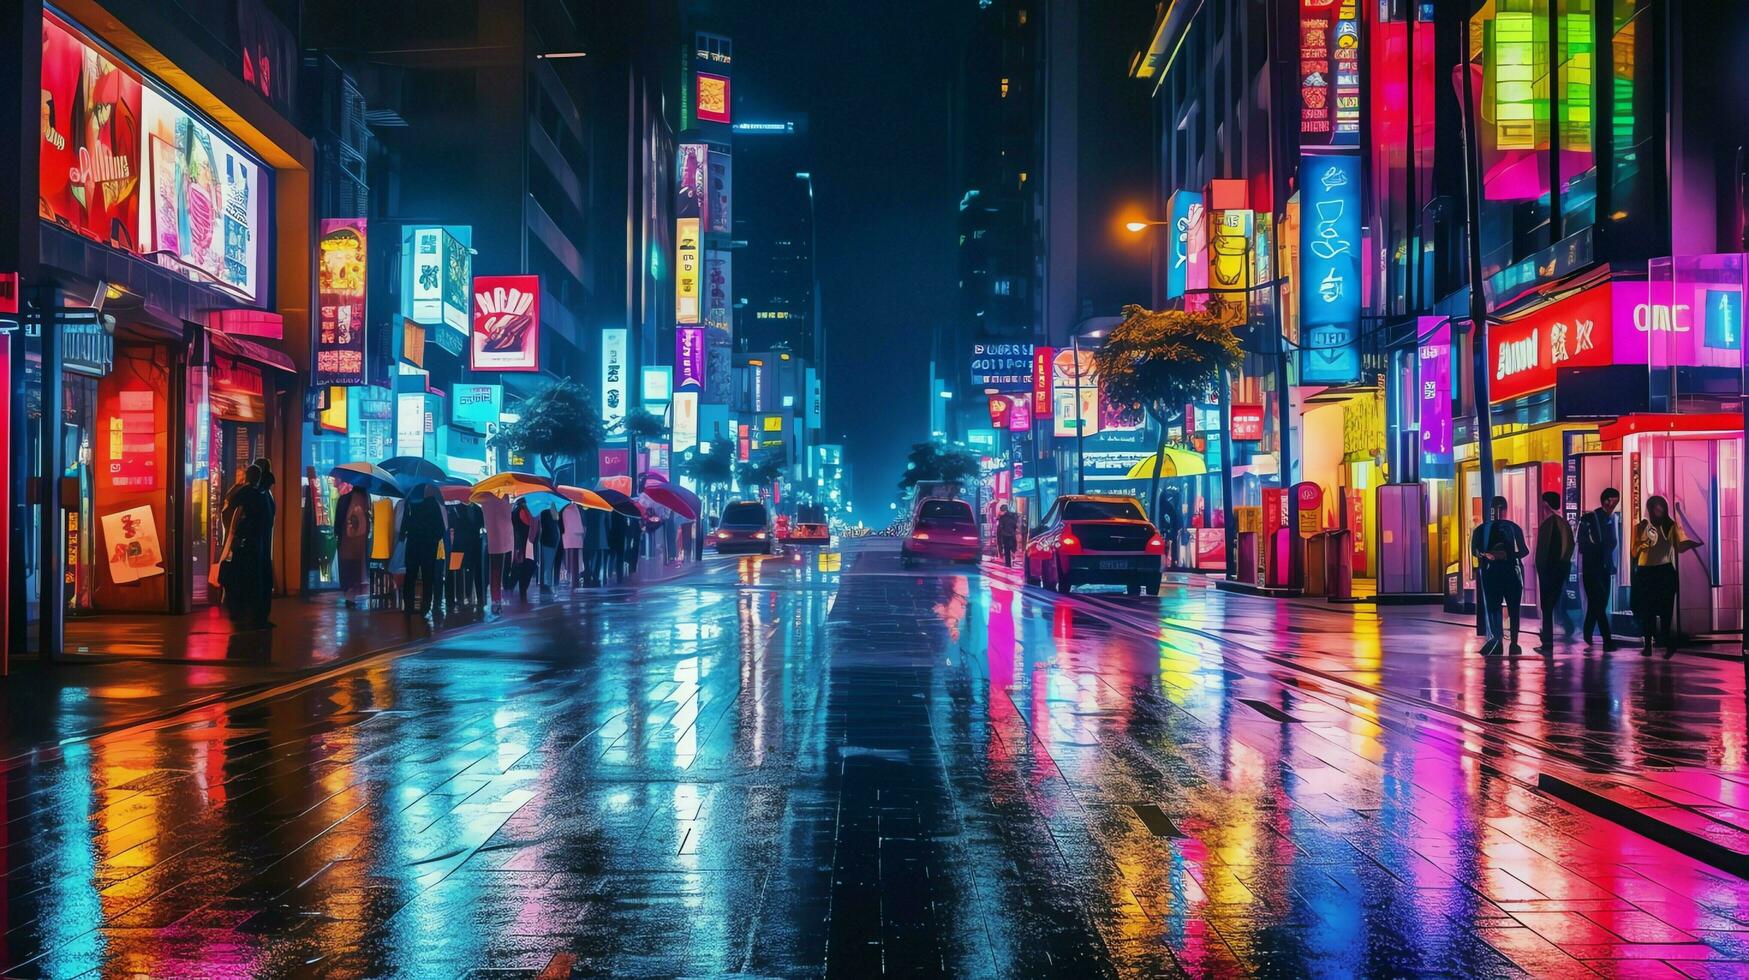 Night scene of after rain city in cyberpunk style, futuristic nostalgic 80s, 90s. Neon lights vibrant colors, photorealistic horizontal illustration. ai generated photo